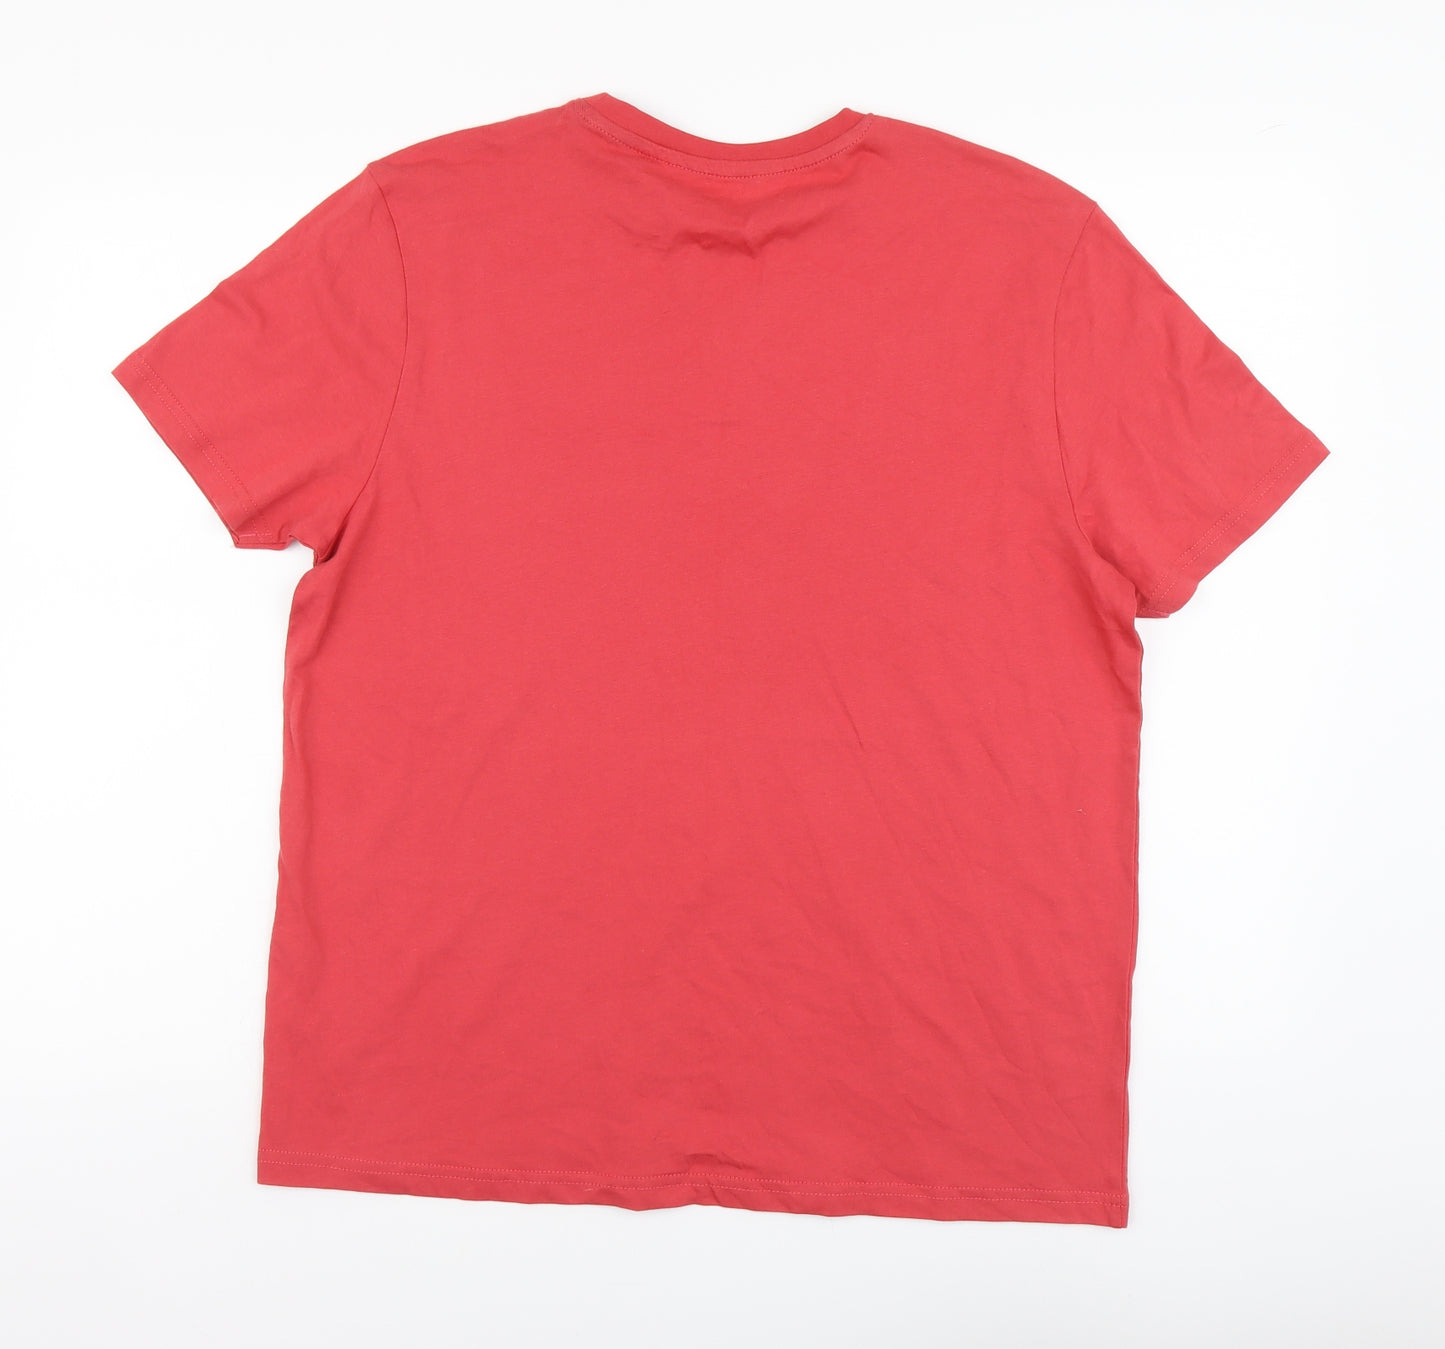 George Mens Red Cotton T-Shirt Size M Round Neck - Union City